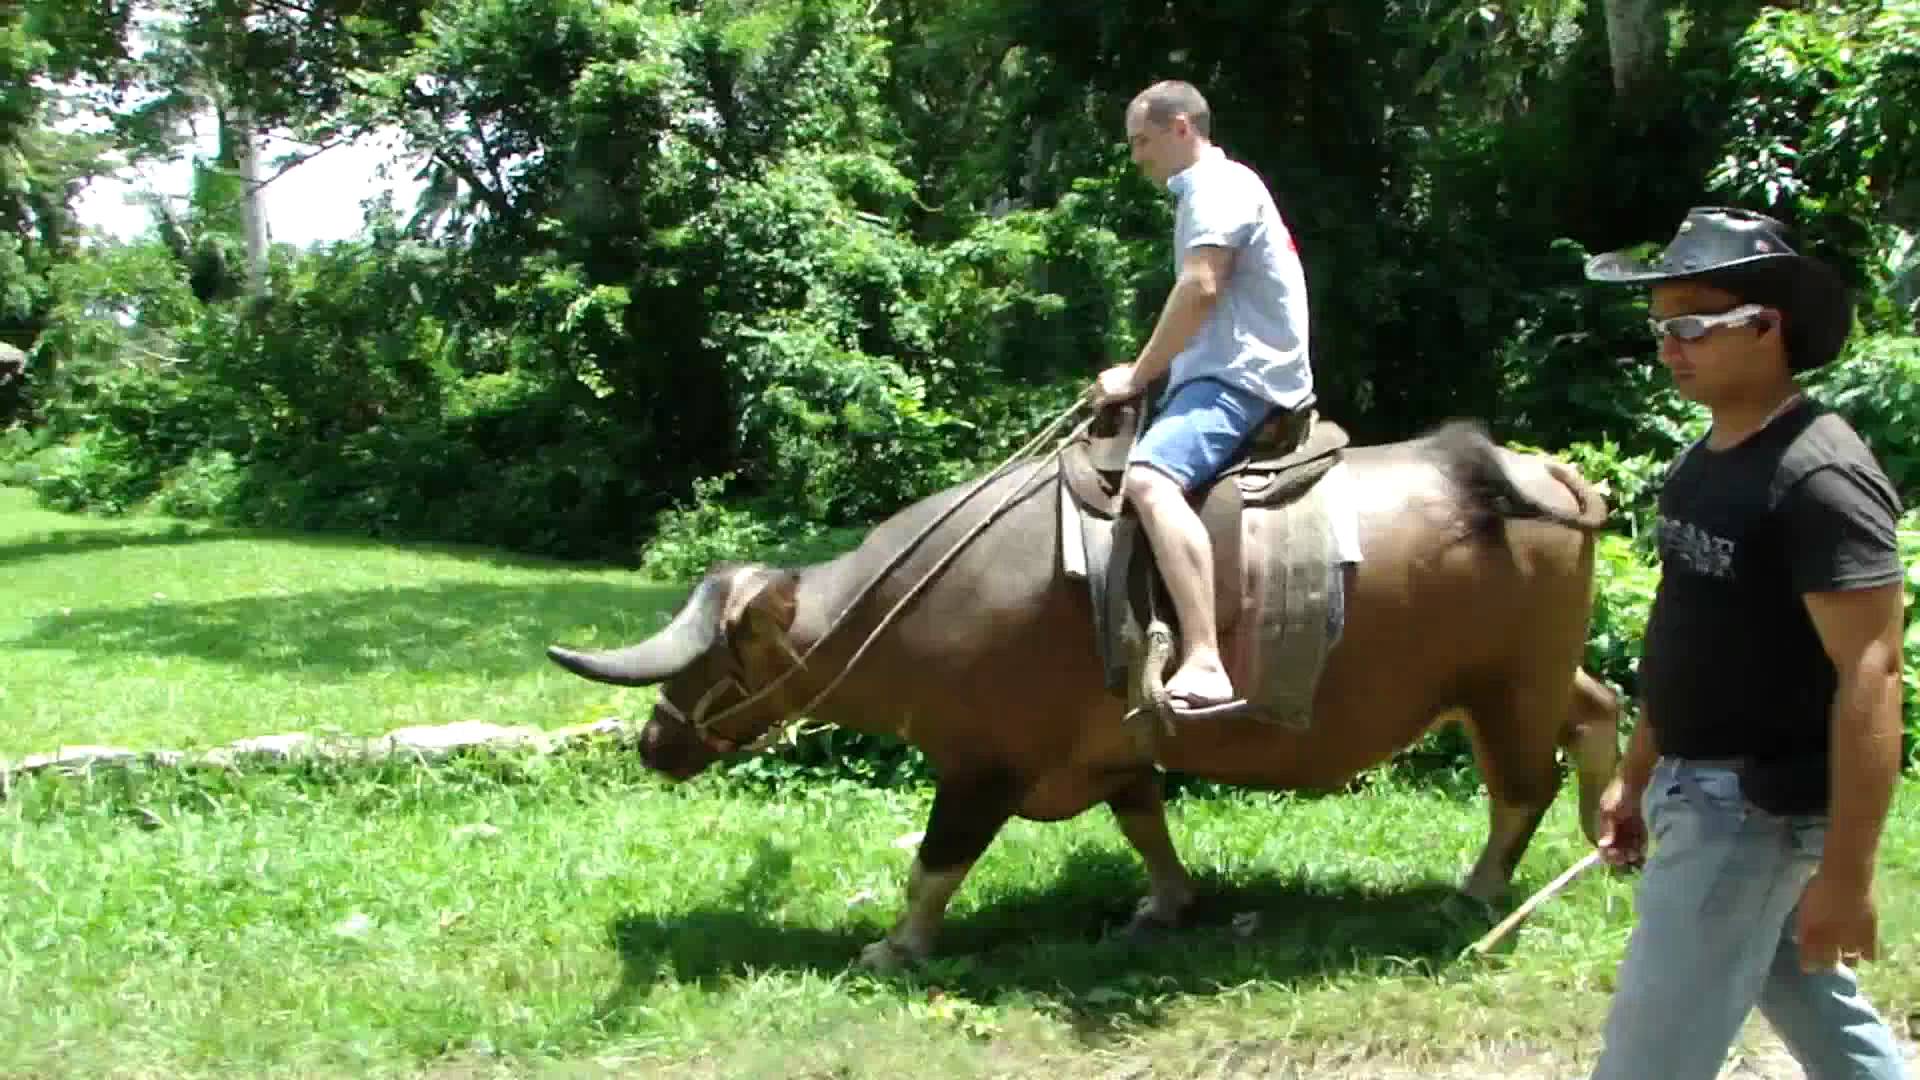 Riding a buffalo in Vinales, Cuba - YouTube